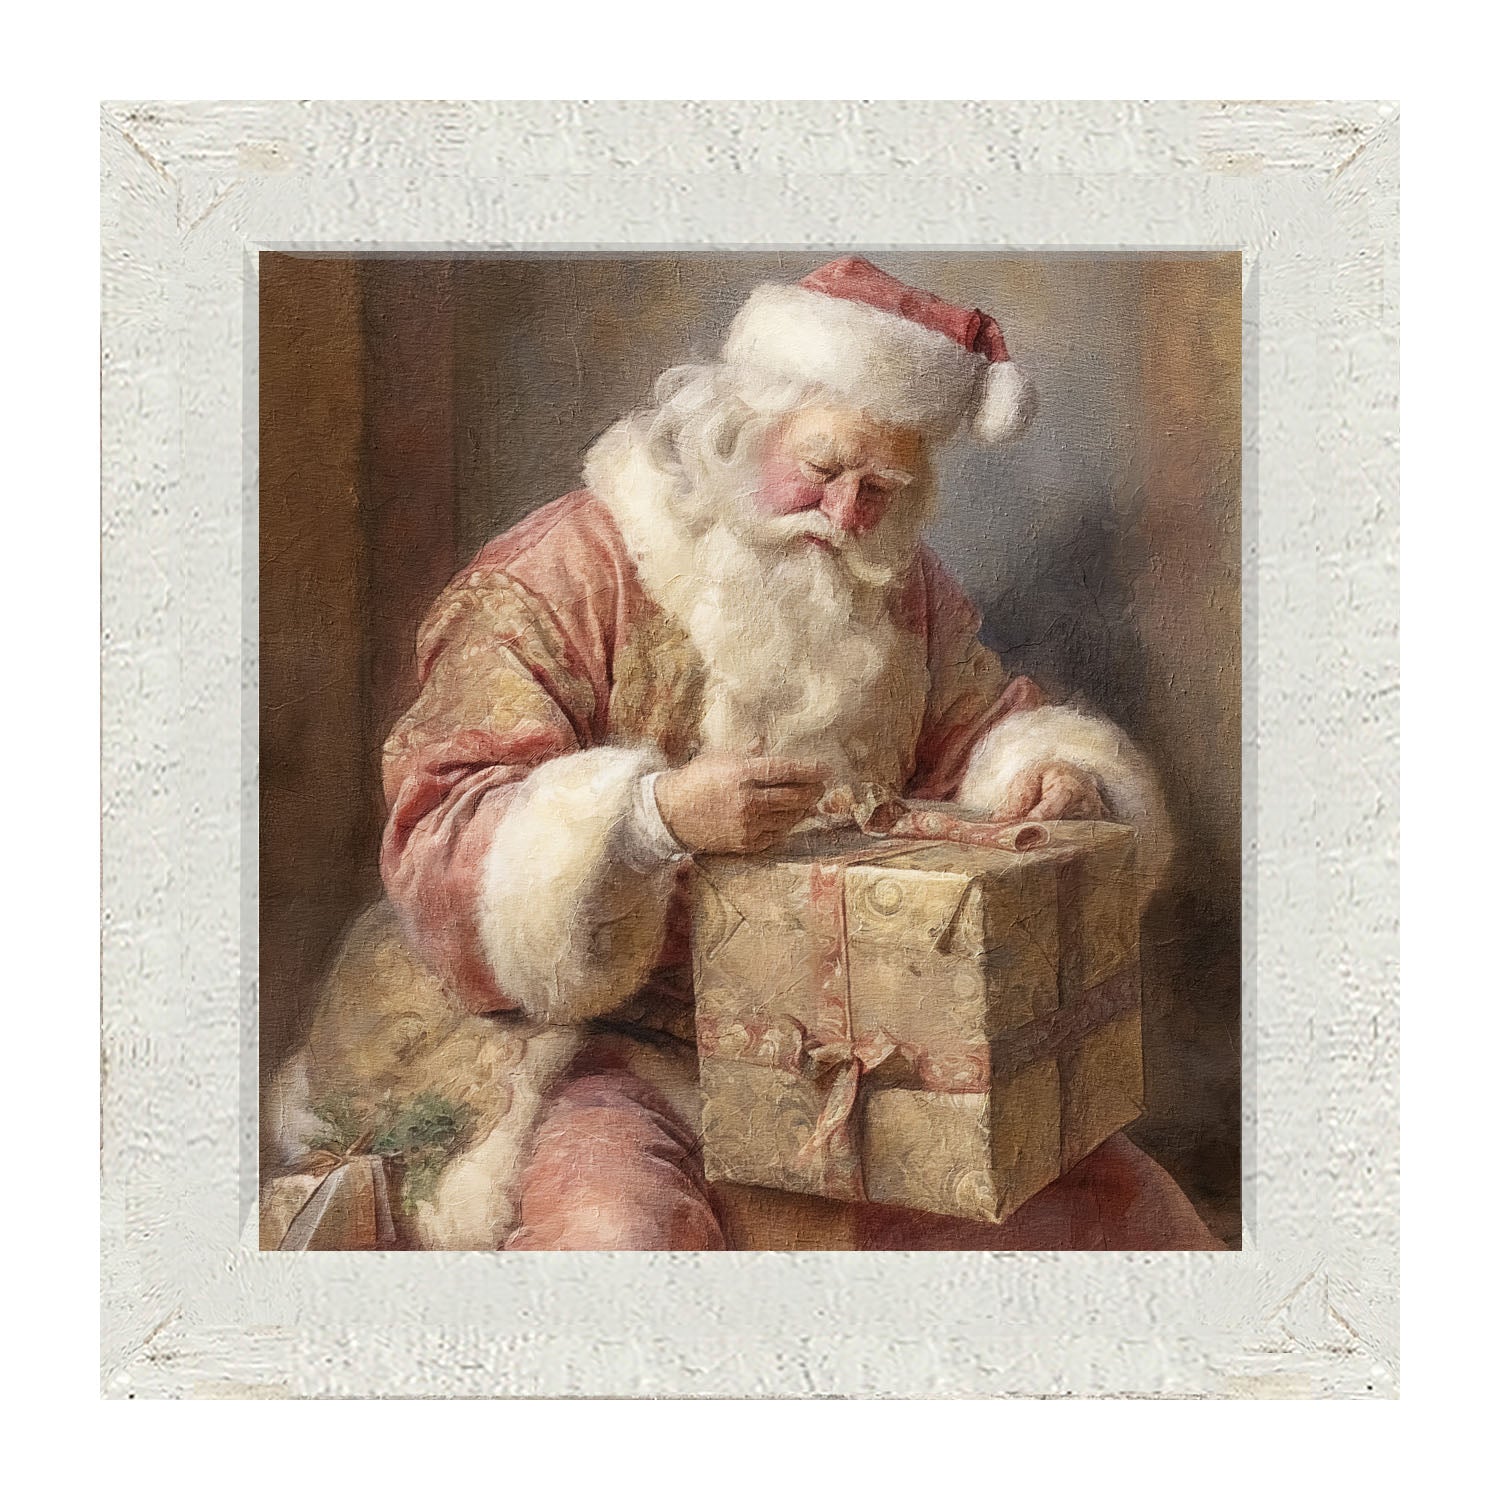 Old world Santa sitting